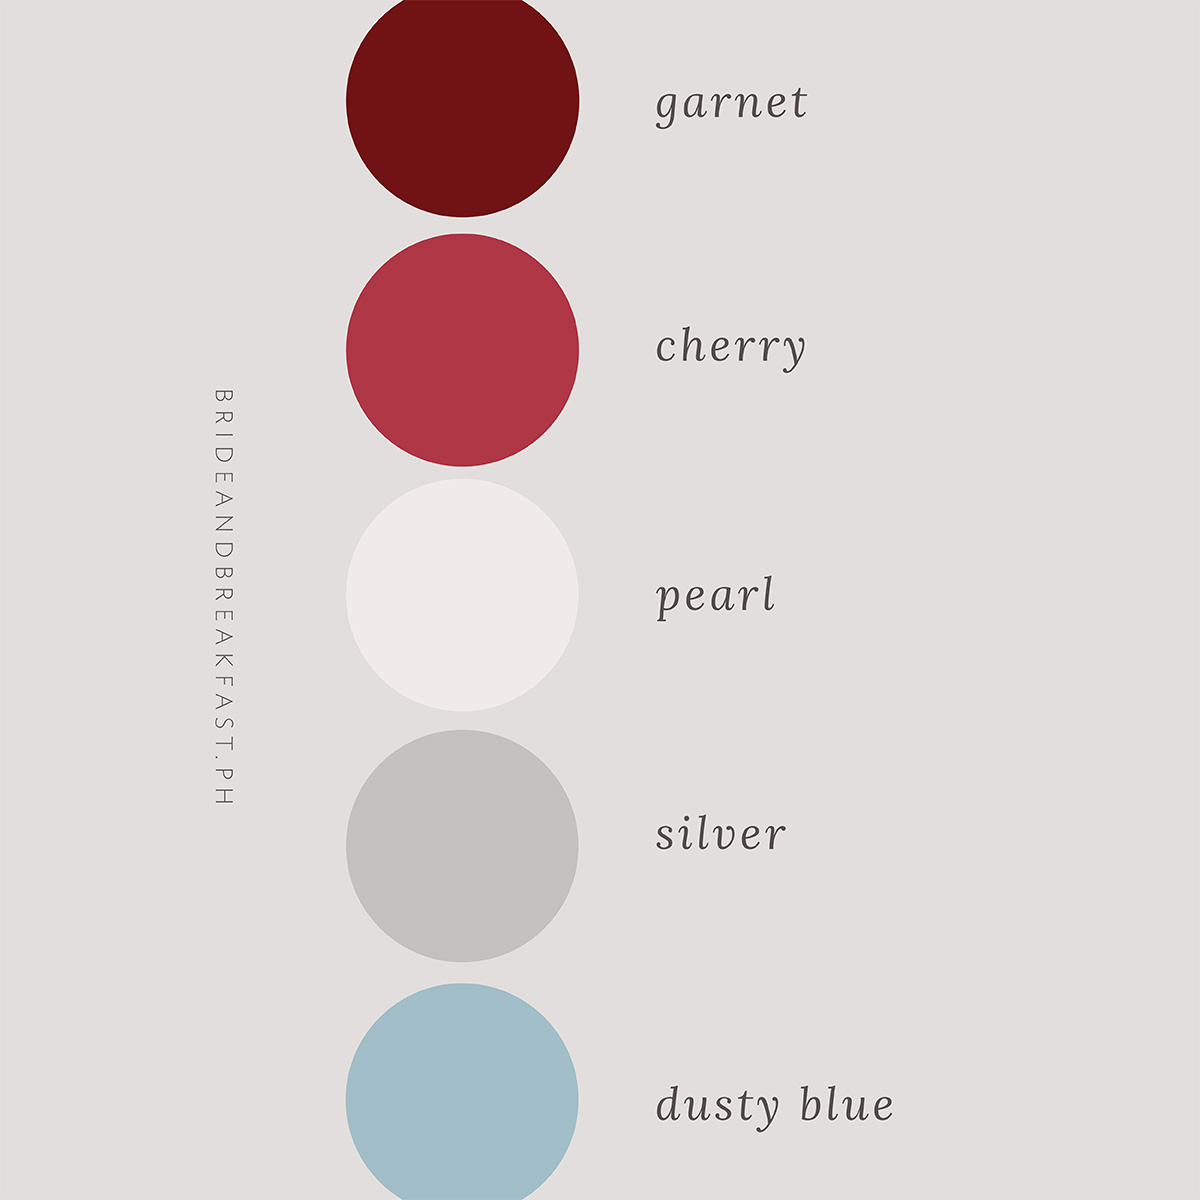 Garnet, cherry, pearl, silver, dusty blue